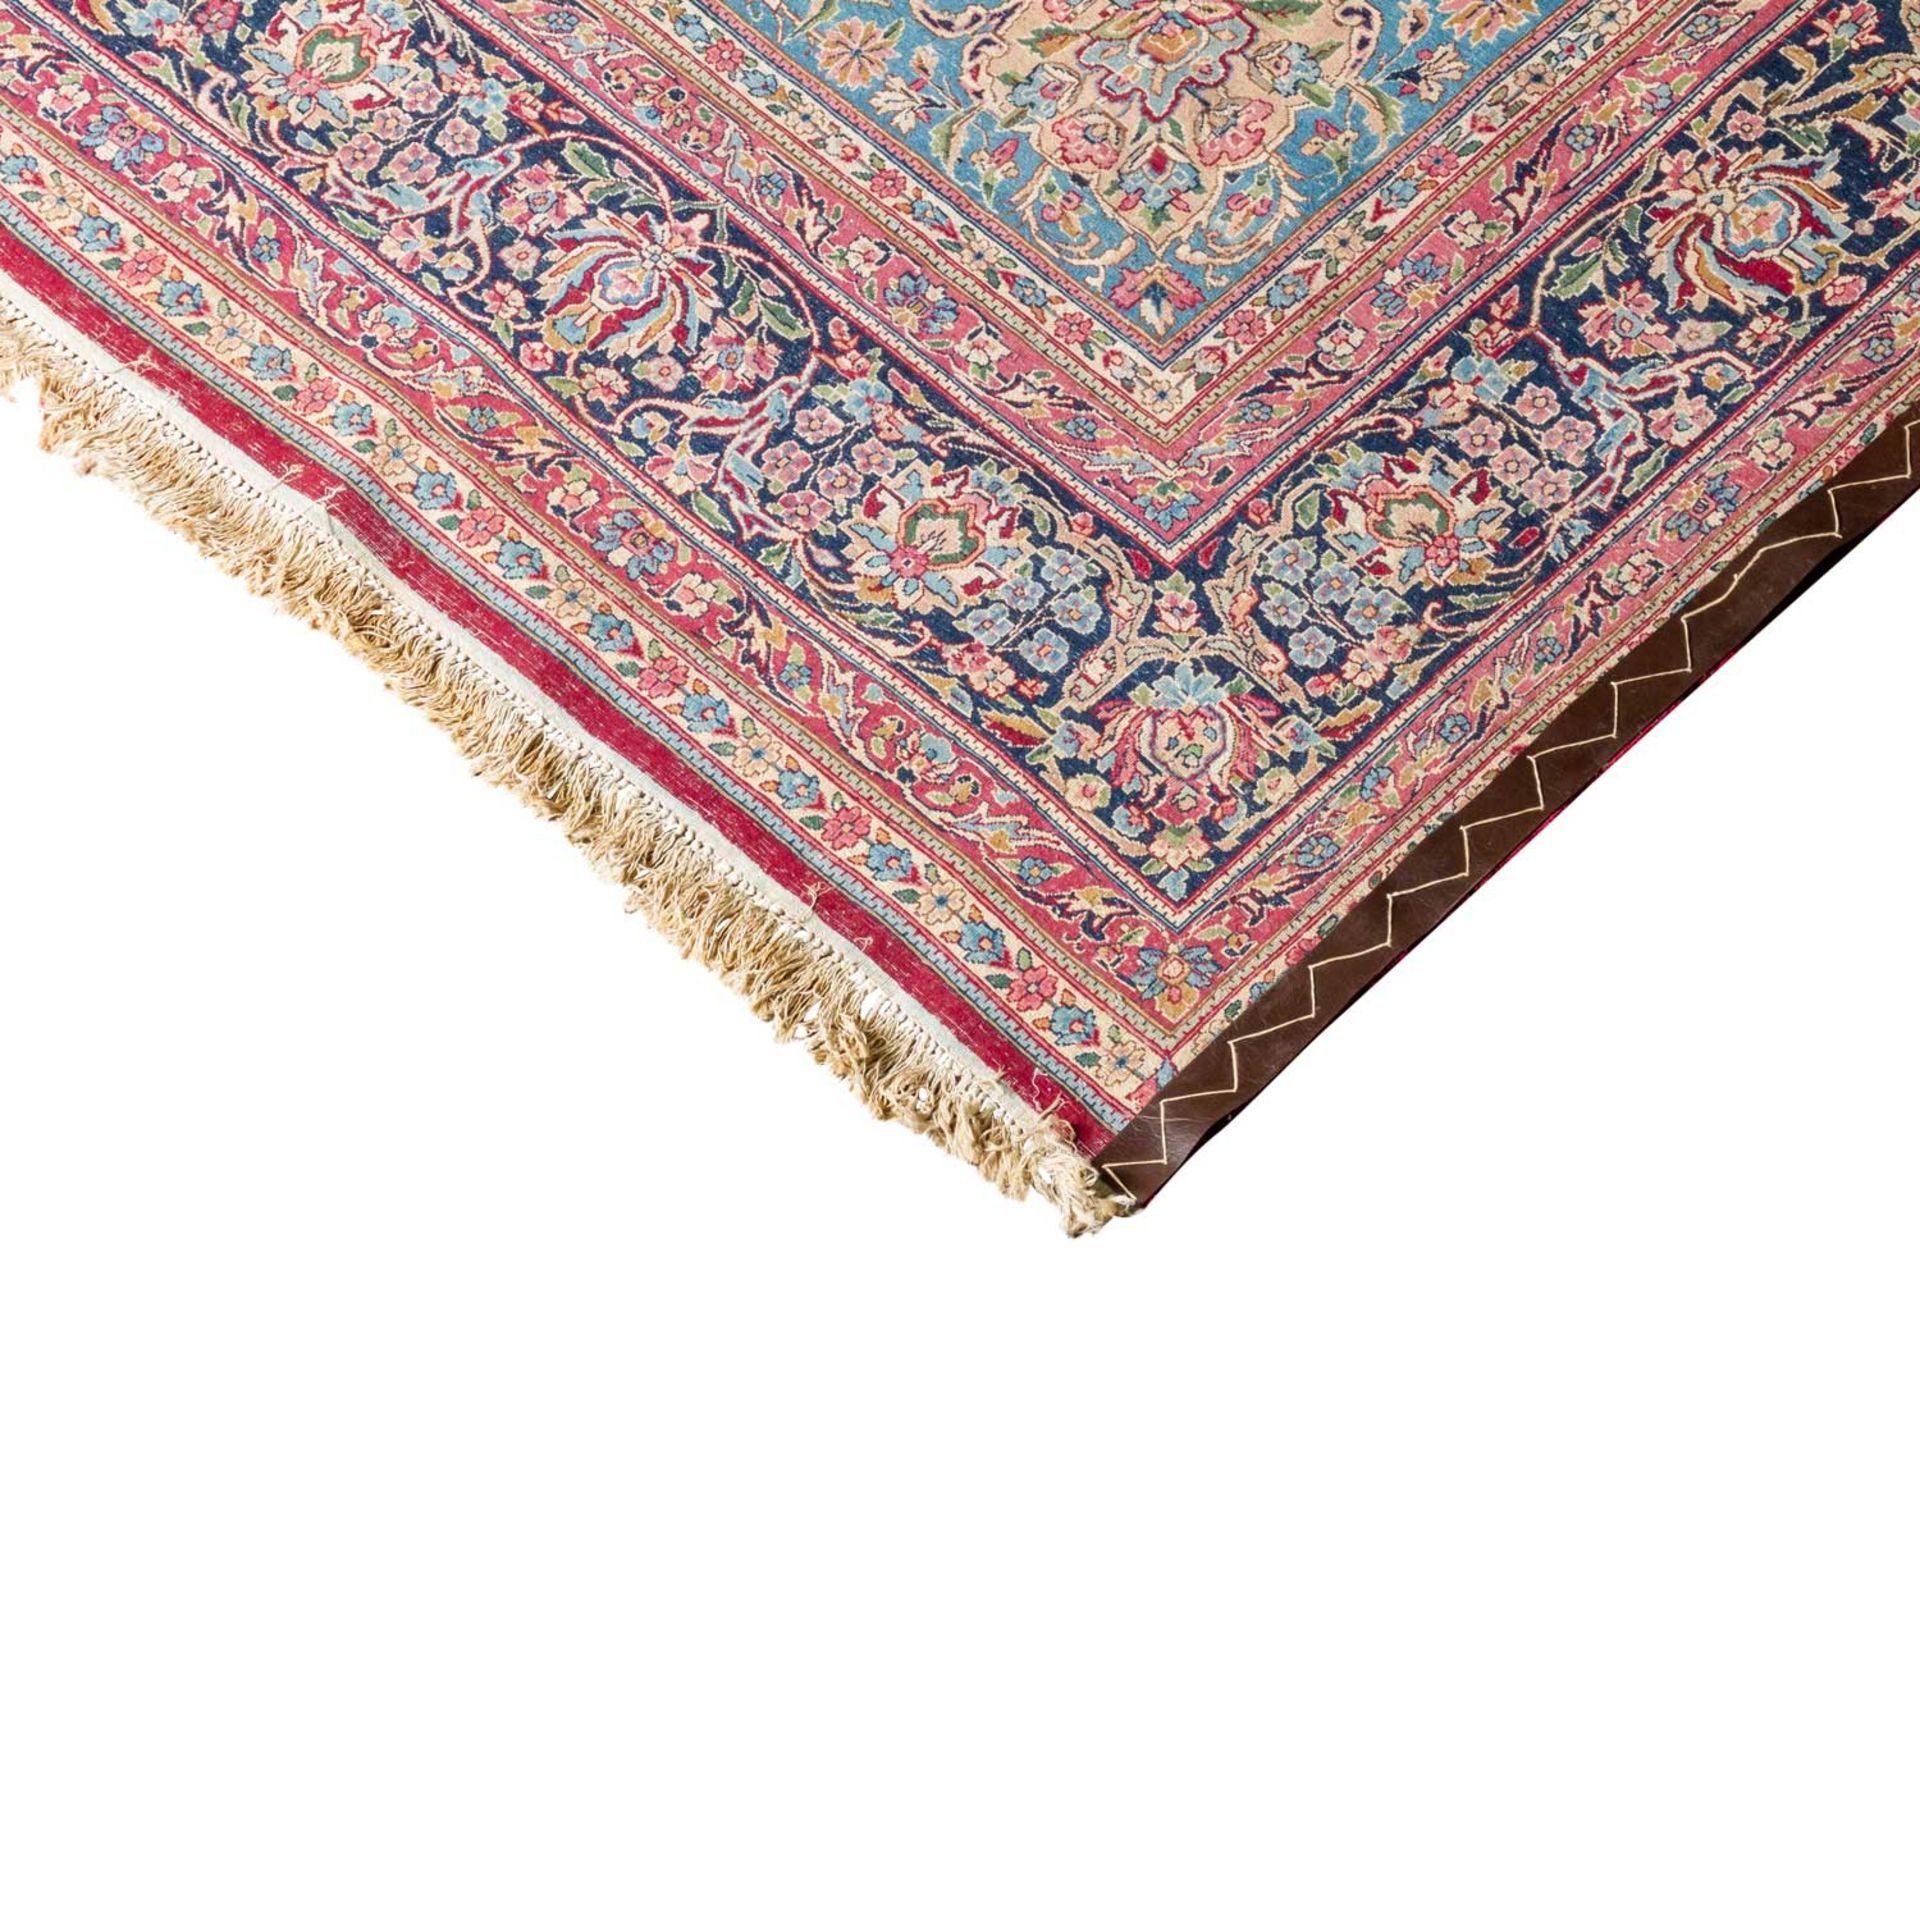 Orientteppich. KIRMAN/PERSIEN, 20. Jh., 415x287 cm. - Image 2 of 3